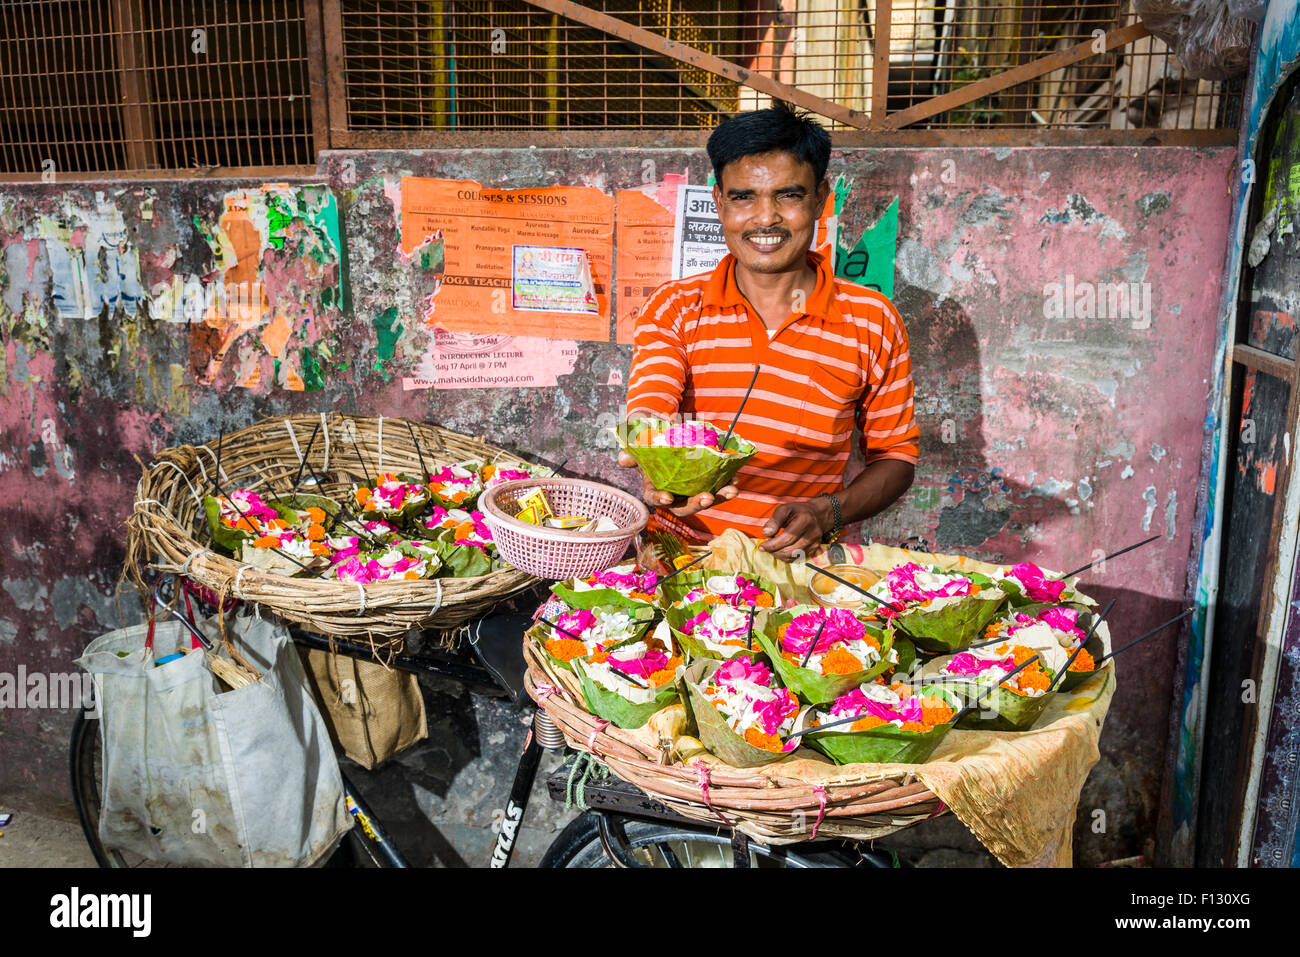 A man is selling deepaks, flower offerings, from a kart in the market, Rishikesh, Uttarakhand, India Stock Photo